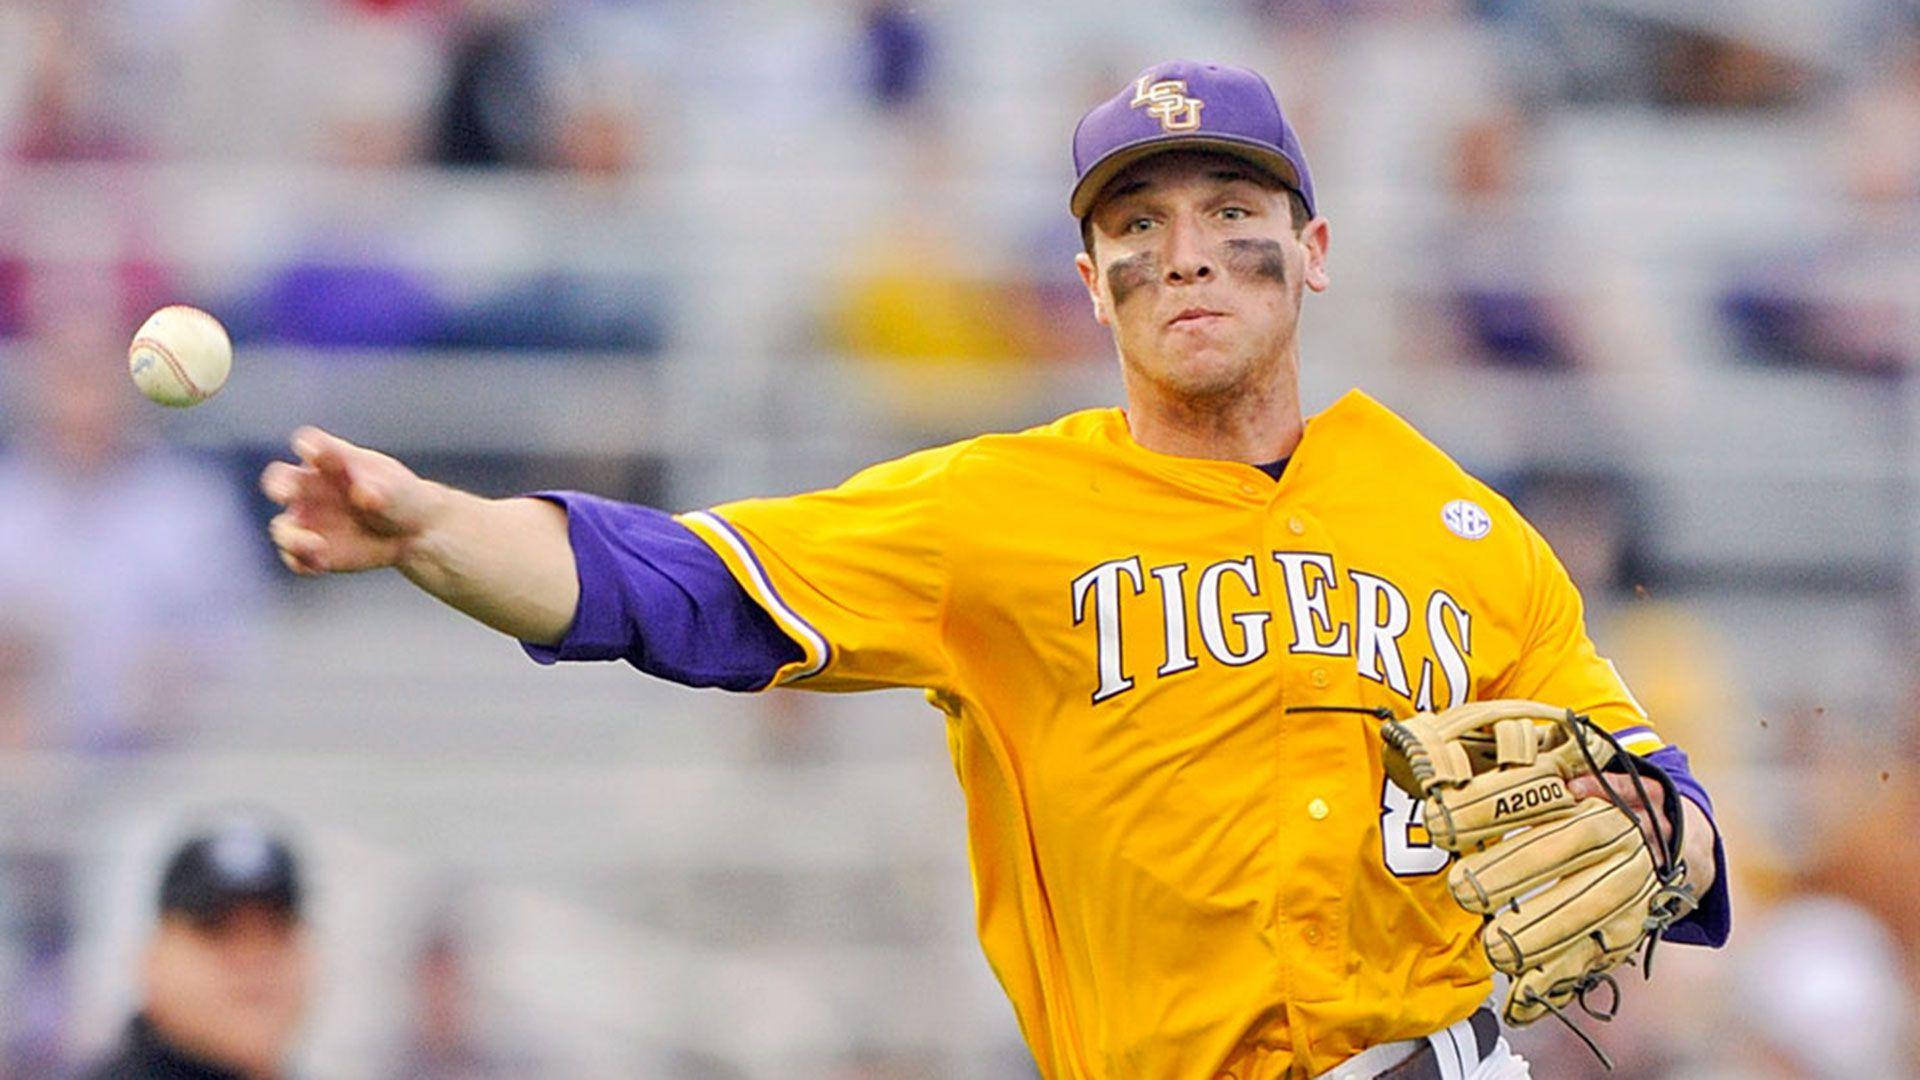 Alex Bregman Catching Ball In Tigers Uniform